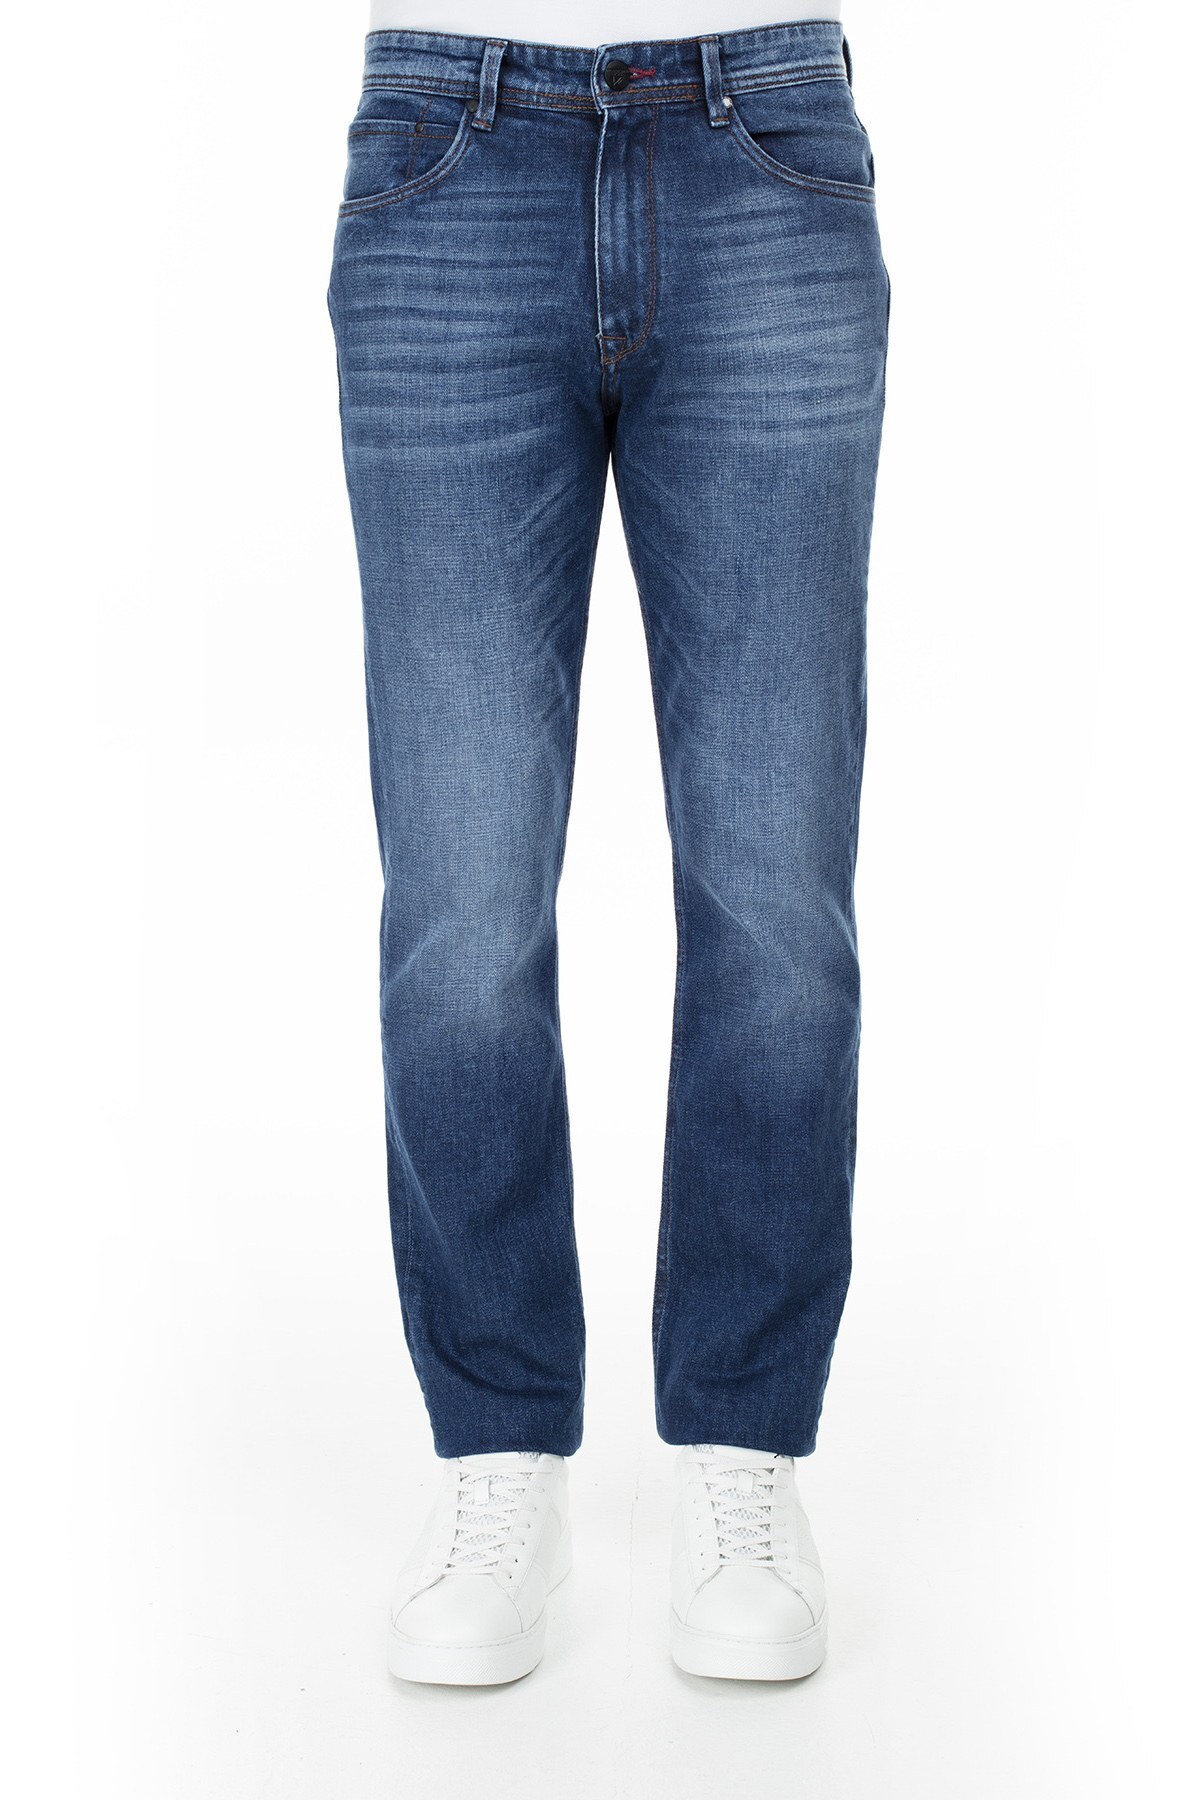 Exxe Jeans Erkek Kot Pantolon 7400S471KING LACİVERT